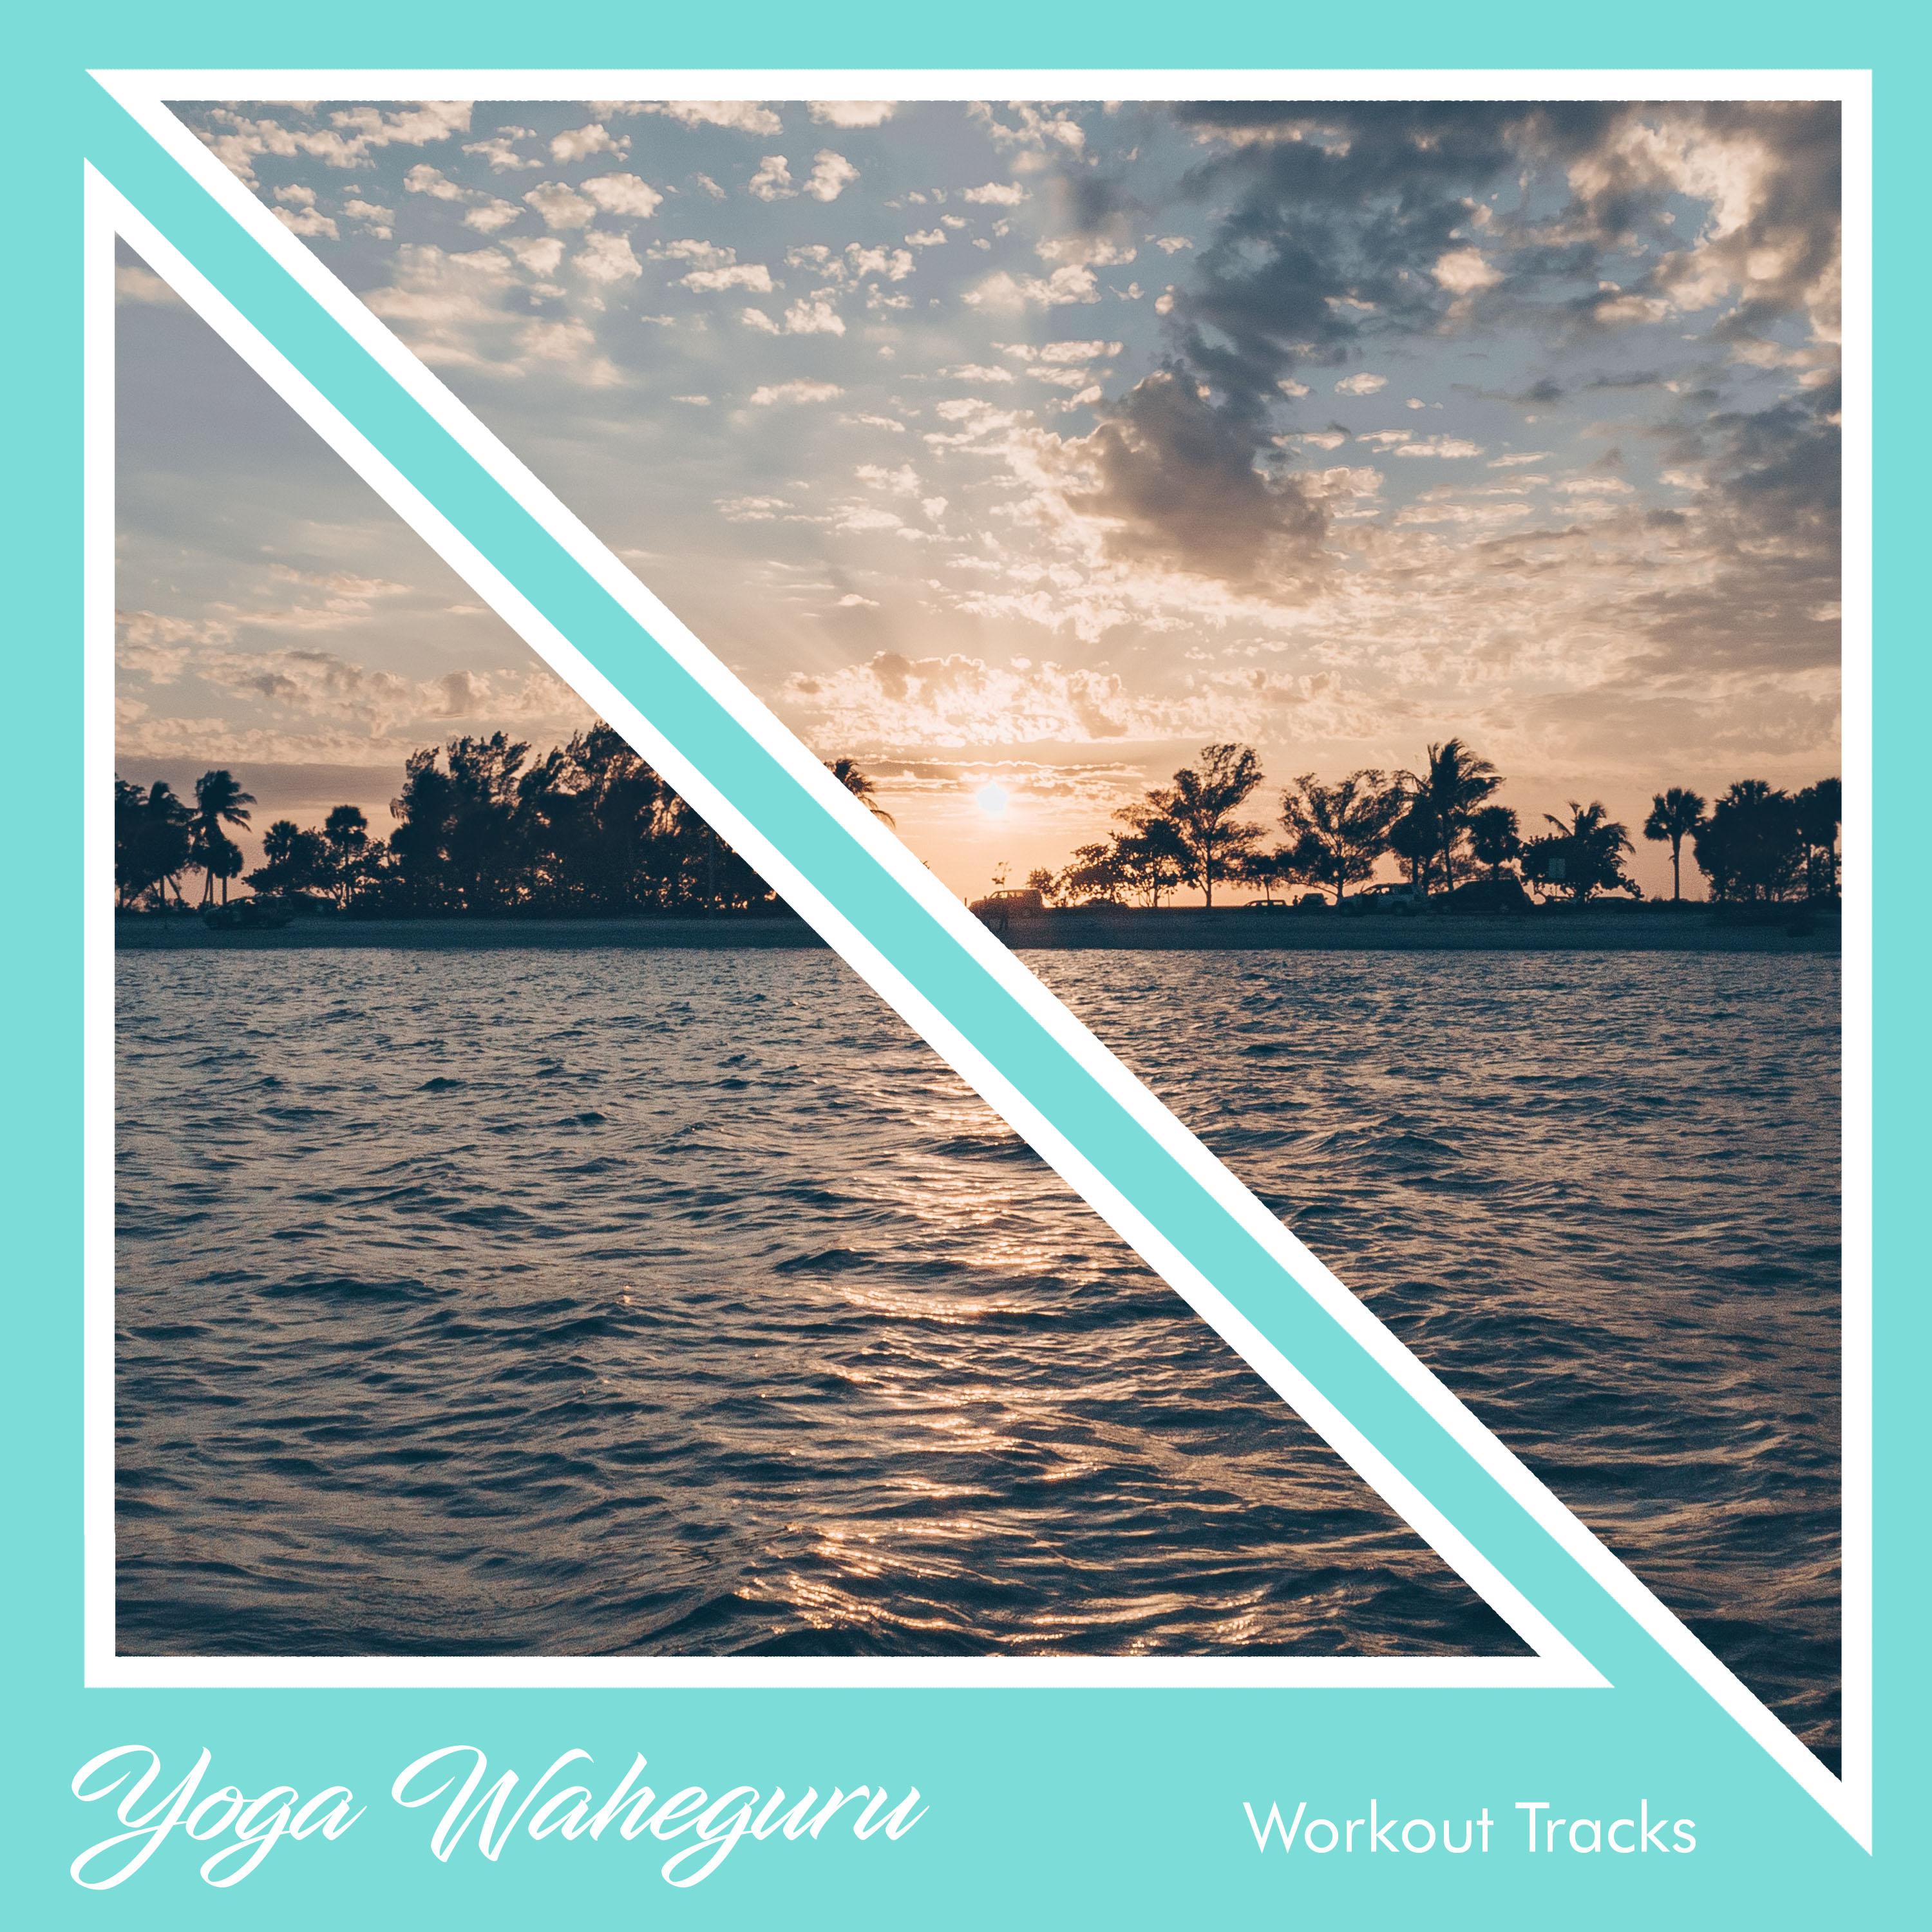 14 Workout Tracks: Yoga Waheguru